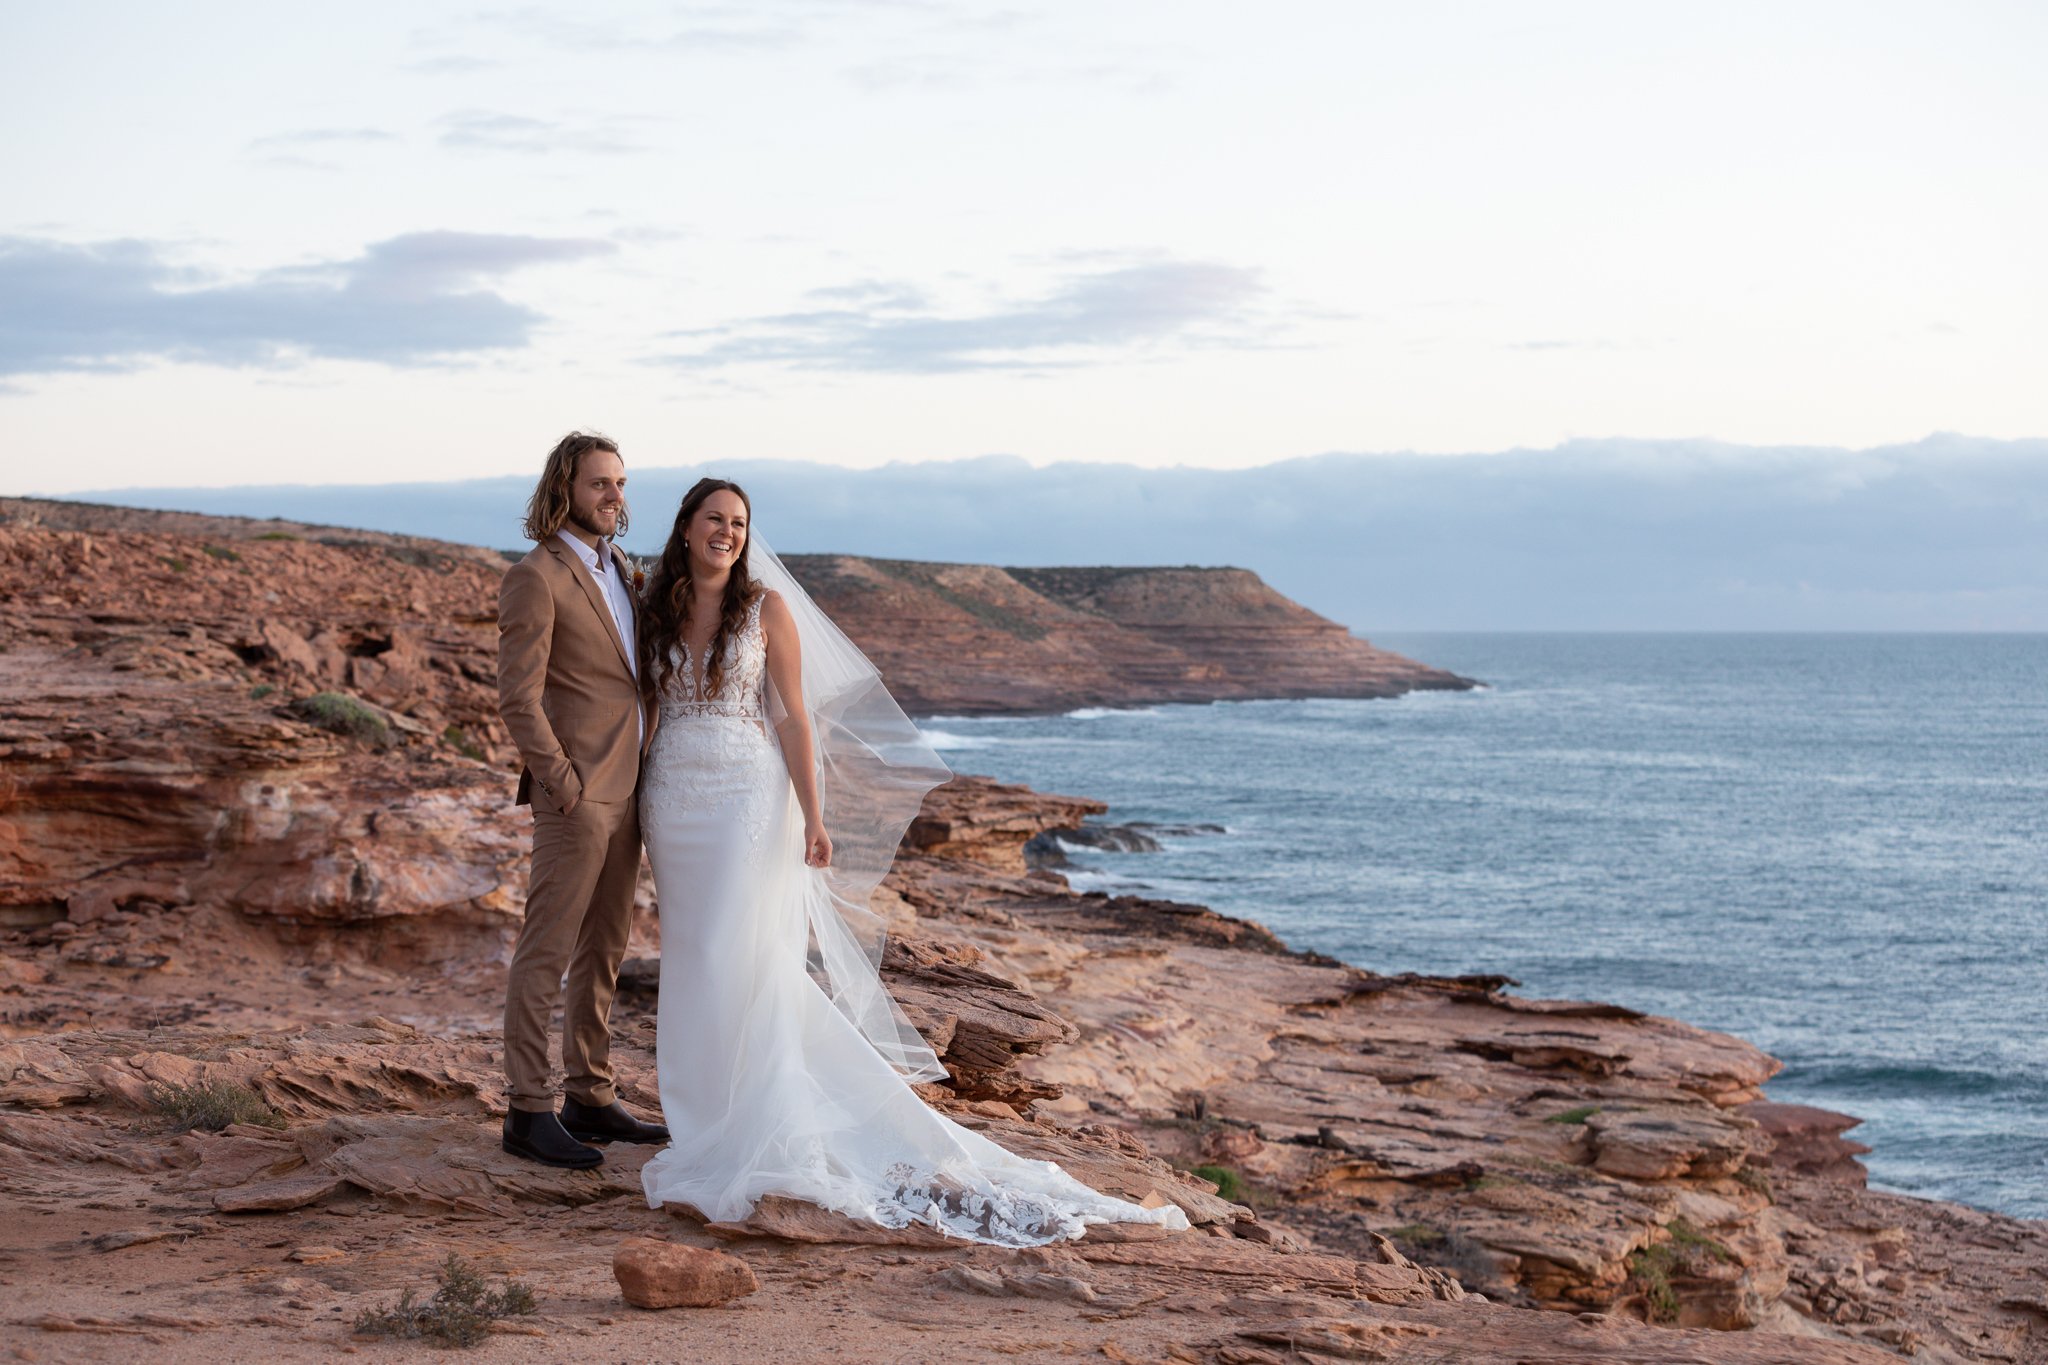 Wedding photographer Kalbarri - coastal cliffs at sunset.jpg